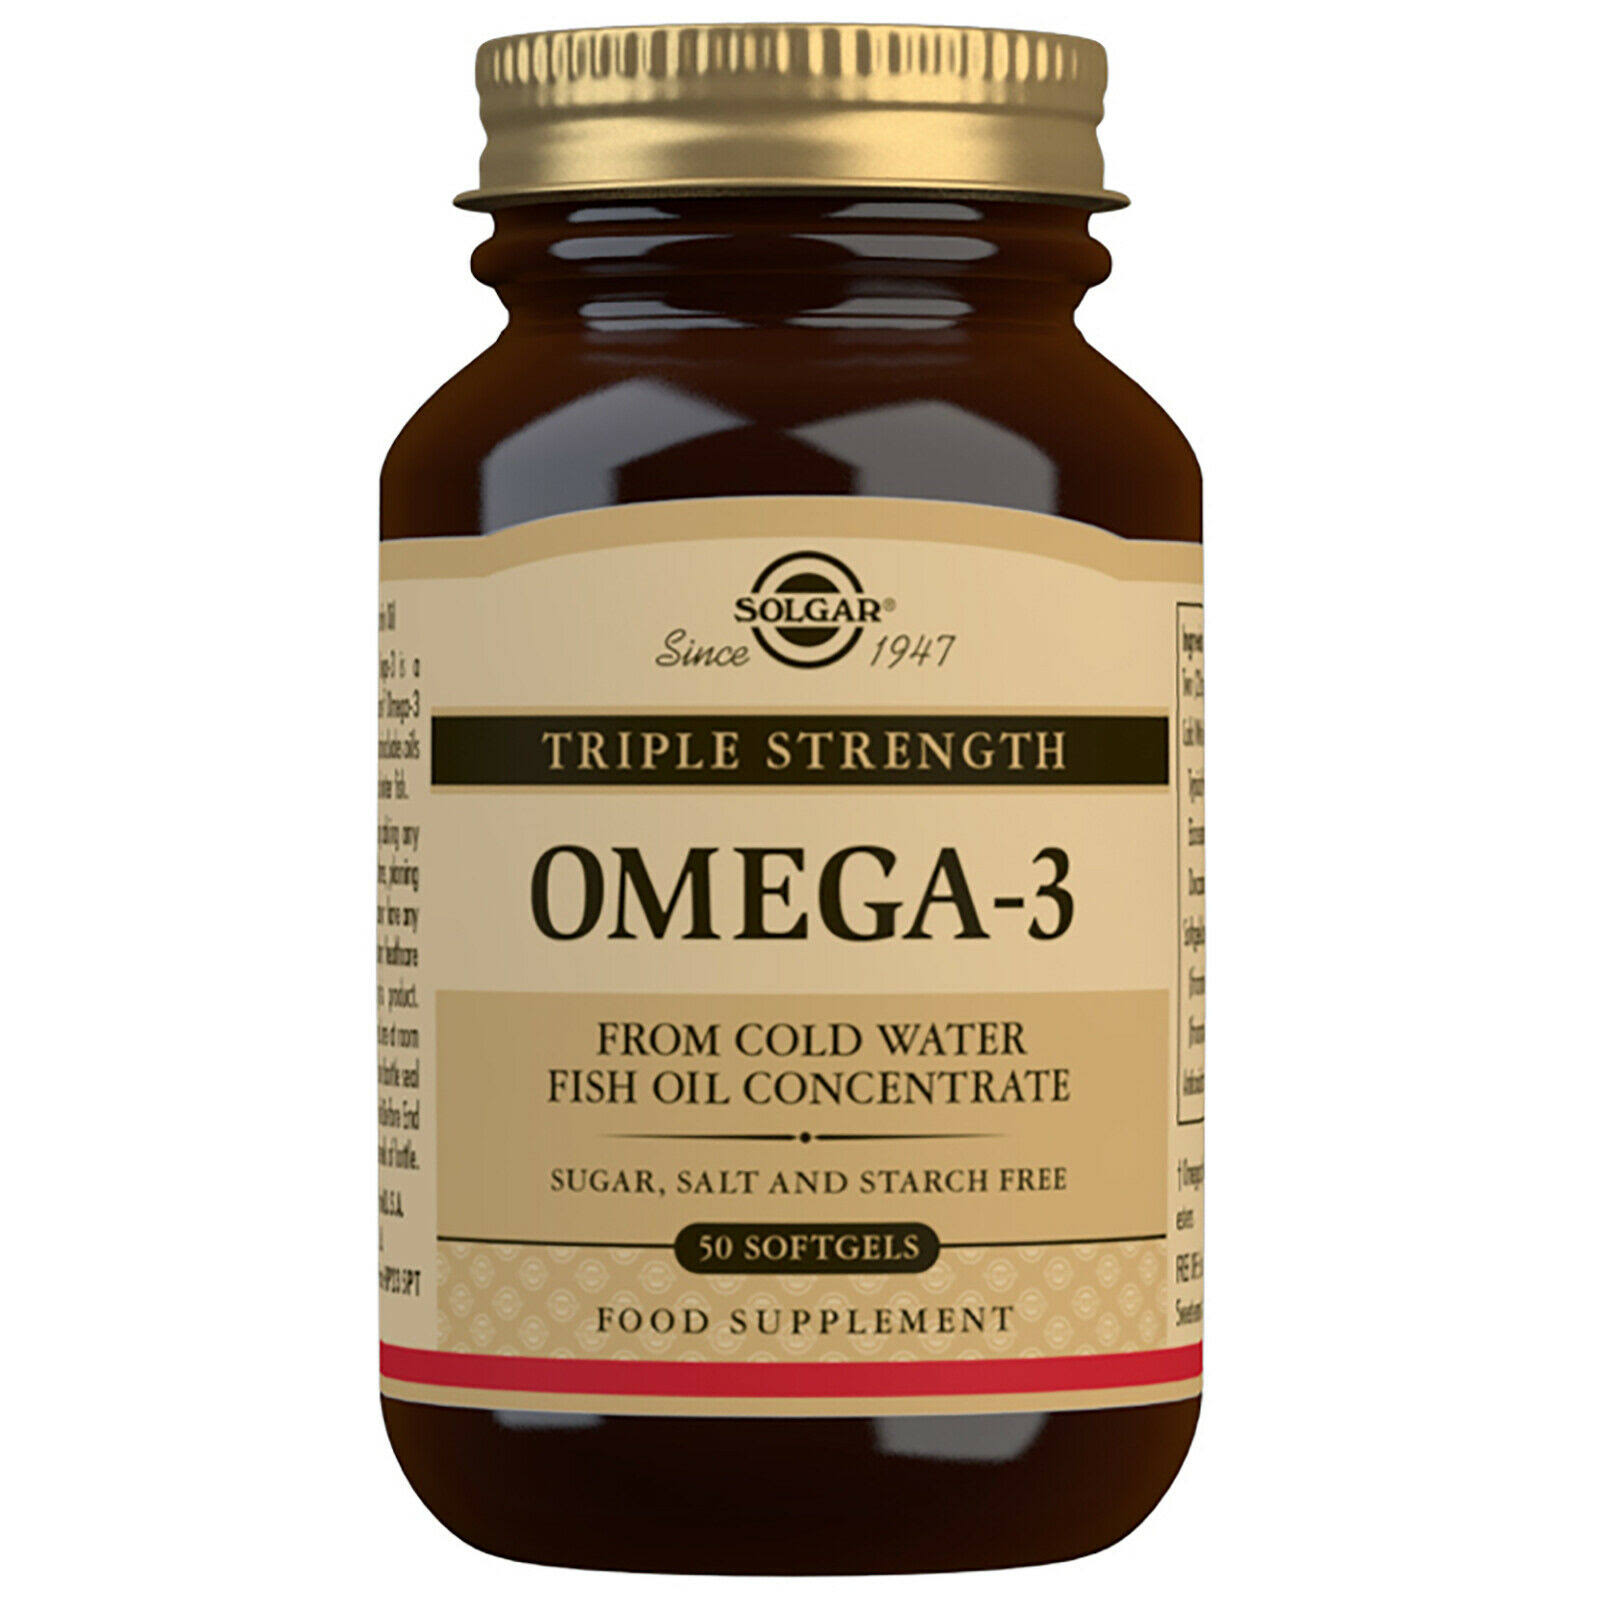 Solgar Omega 3 Dietary Supplement - 50 Softgels